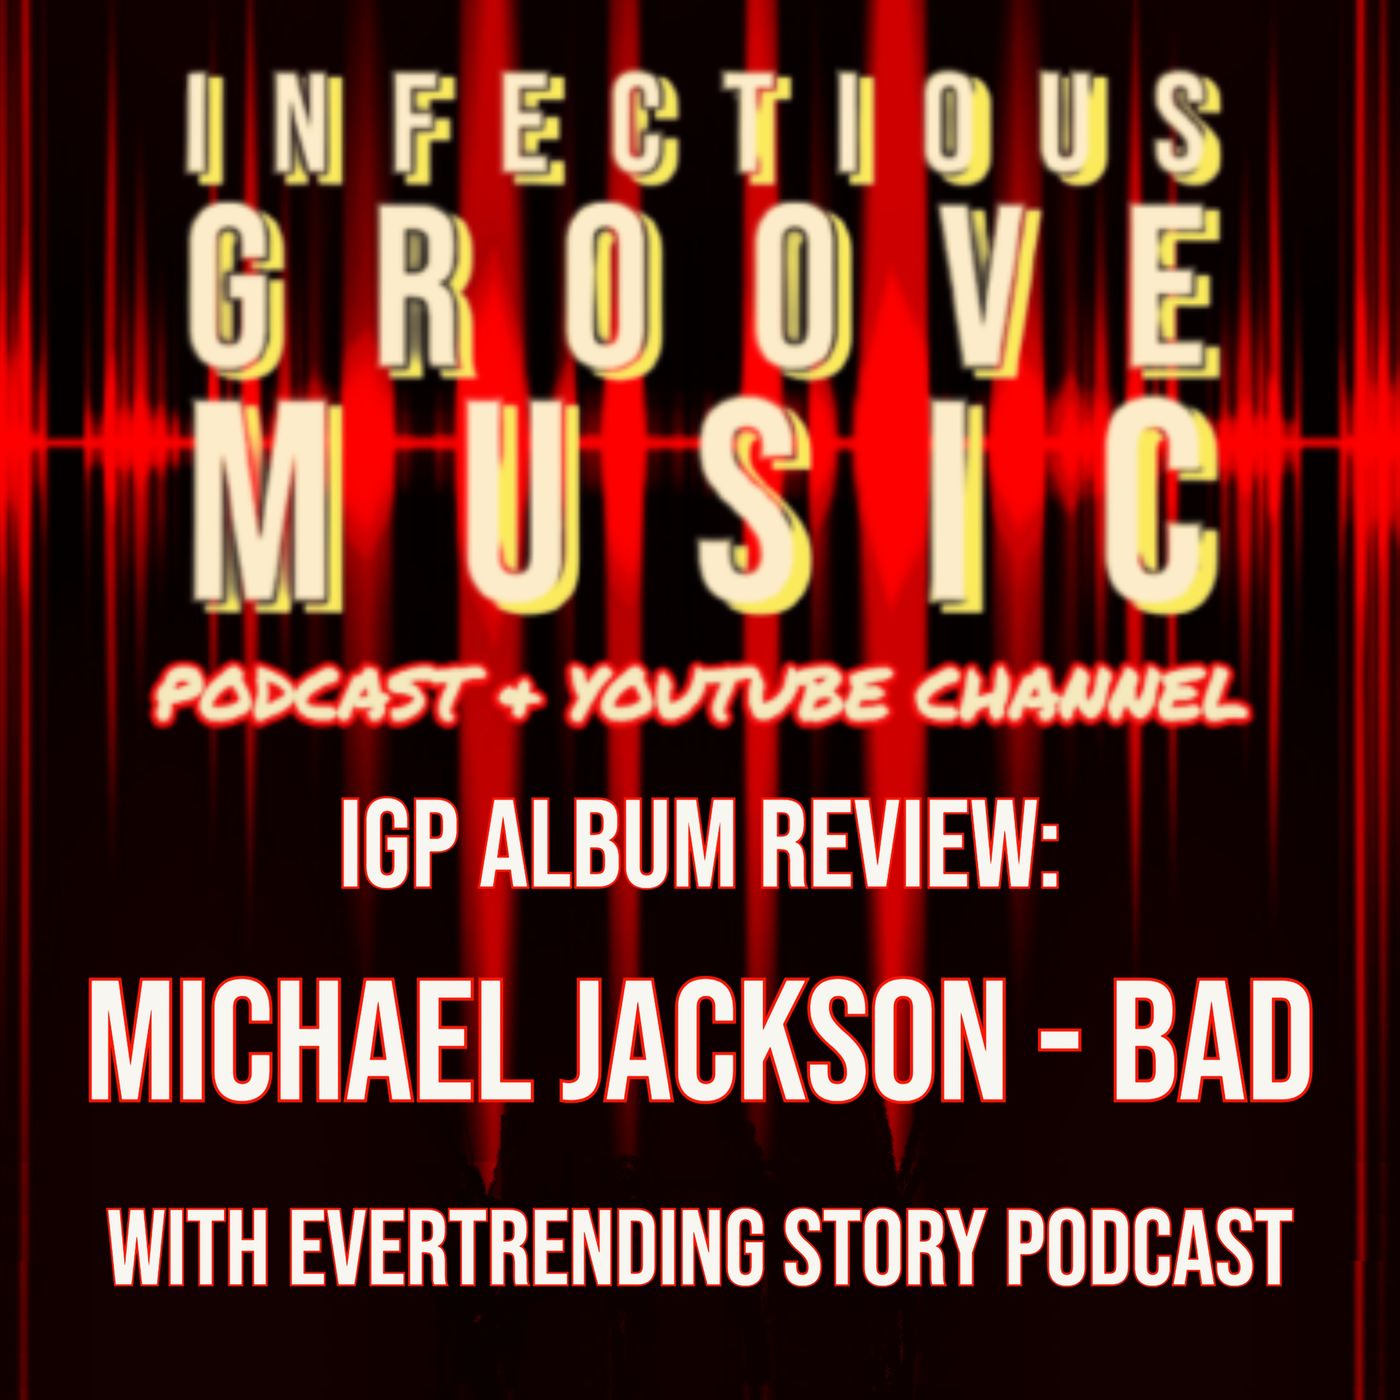 IGP Album Review: Michael Jackson - Bad